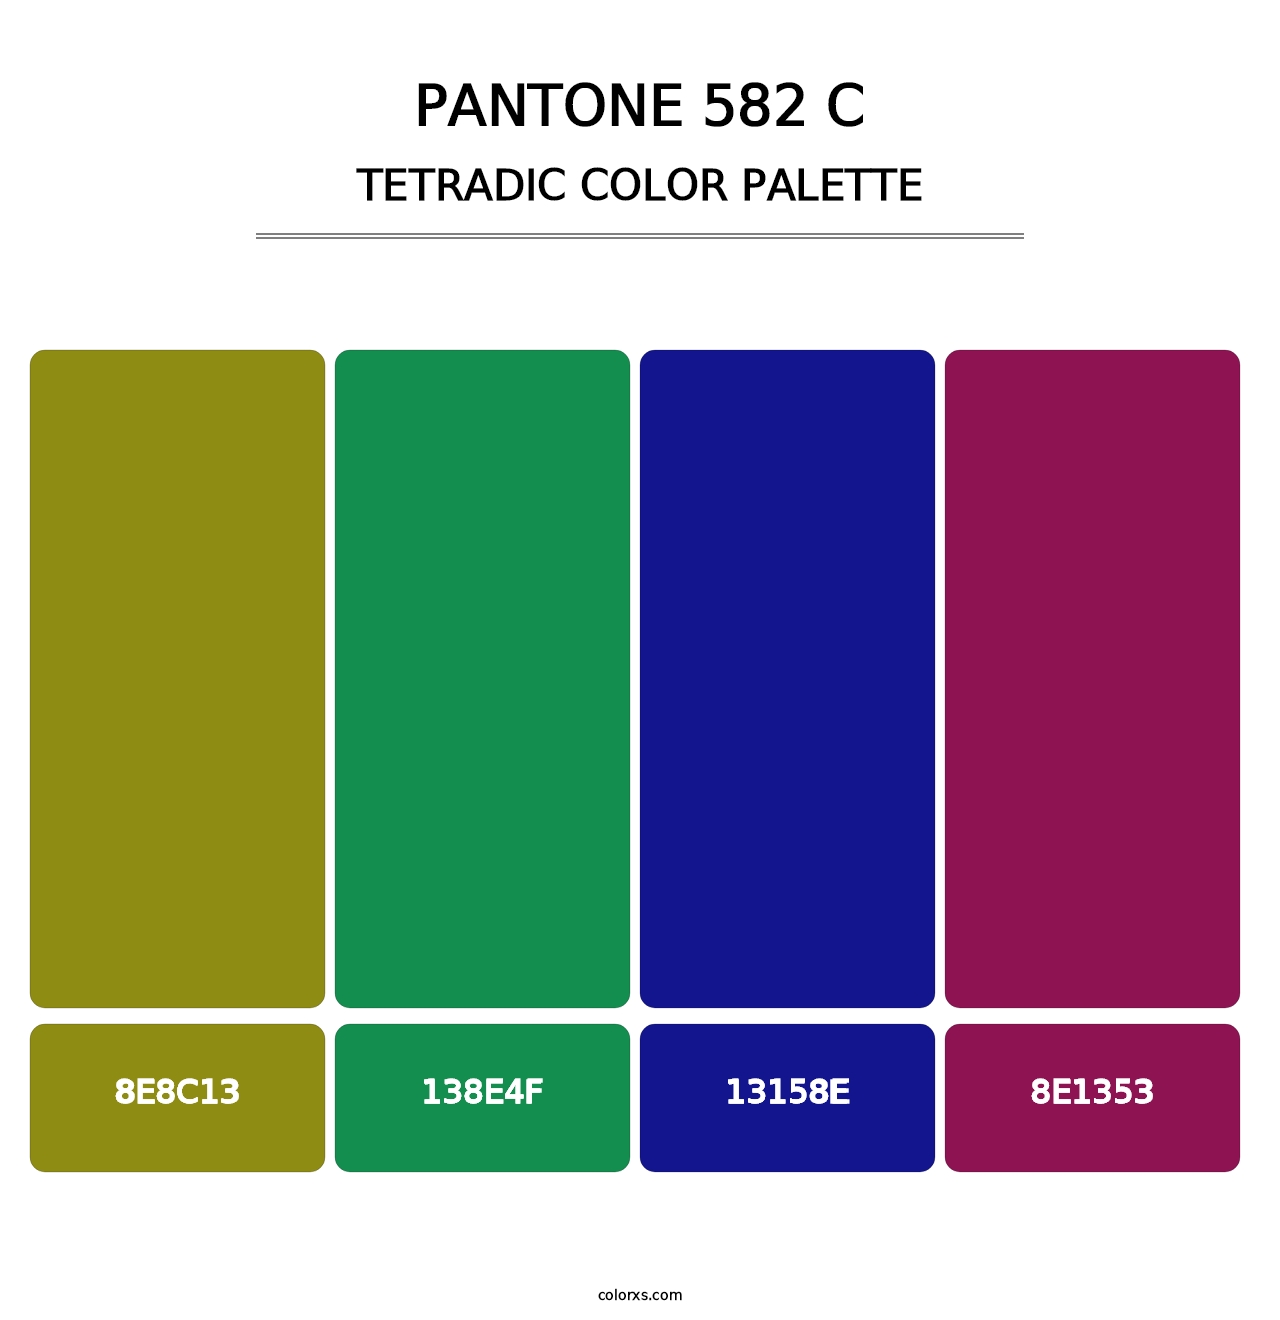 PANTONE 582 C - Tetradic Color Palette